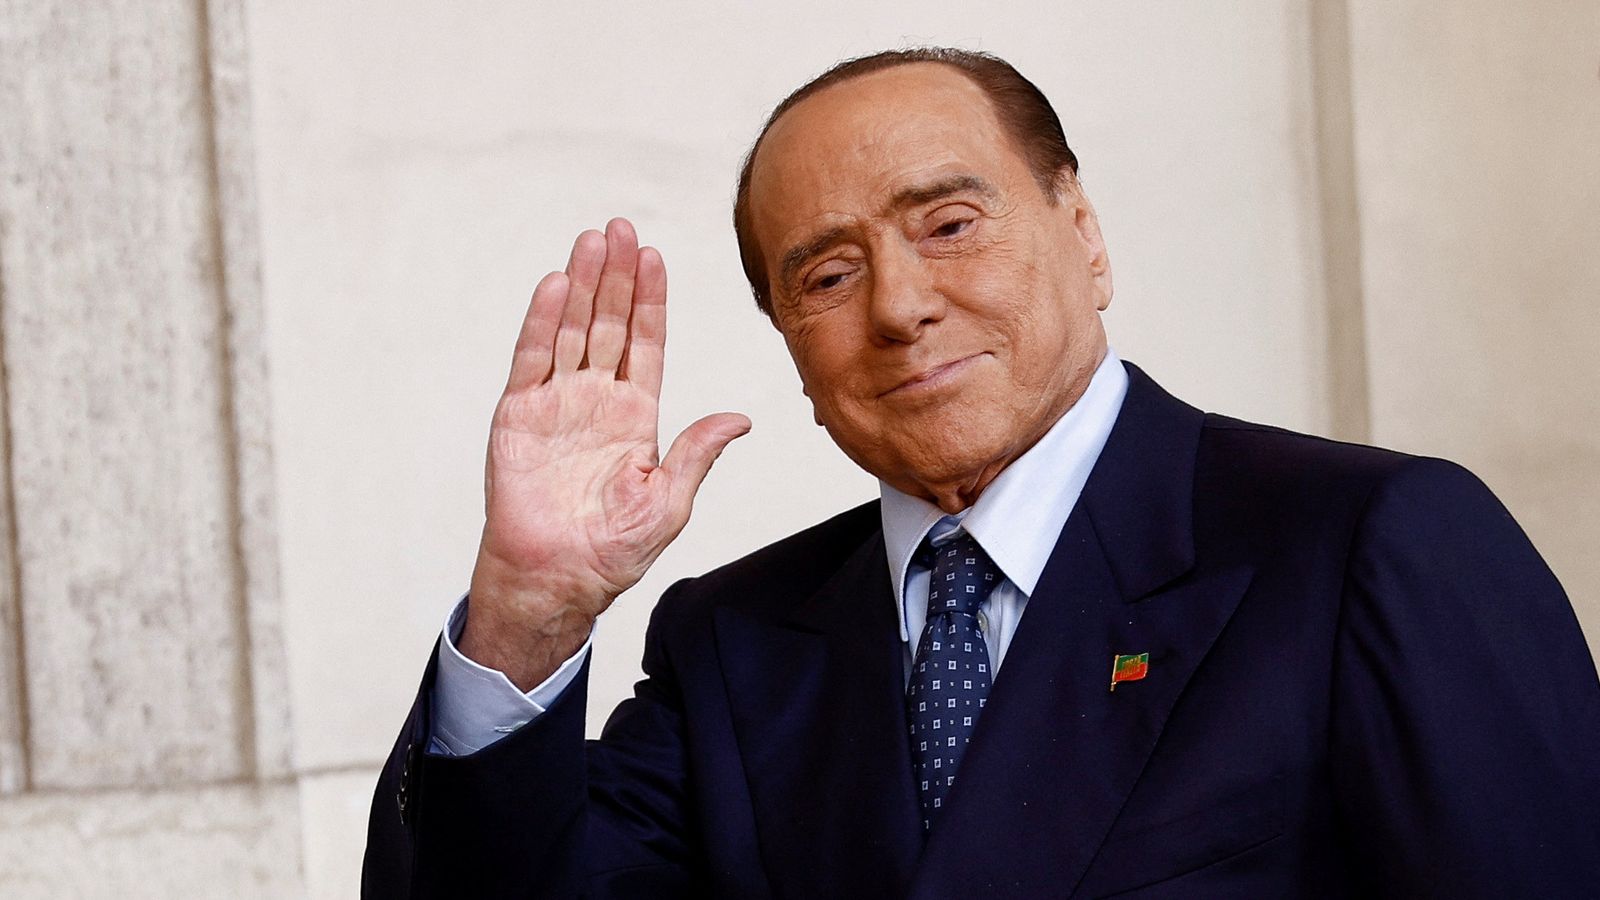 Silvio Berlusconi: Former Italian prime minister reportedly diagnosed with leukaemia